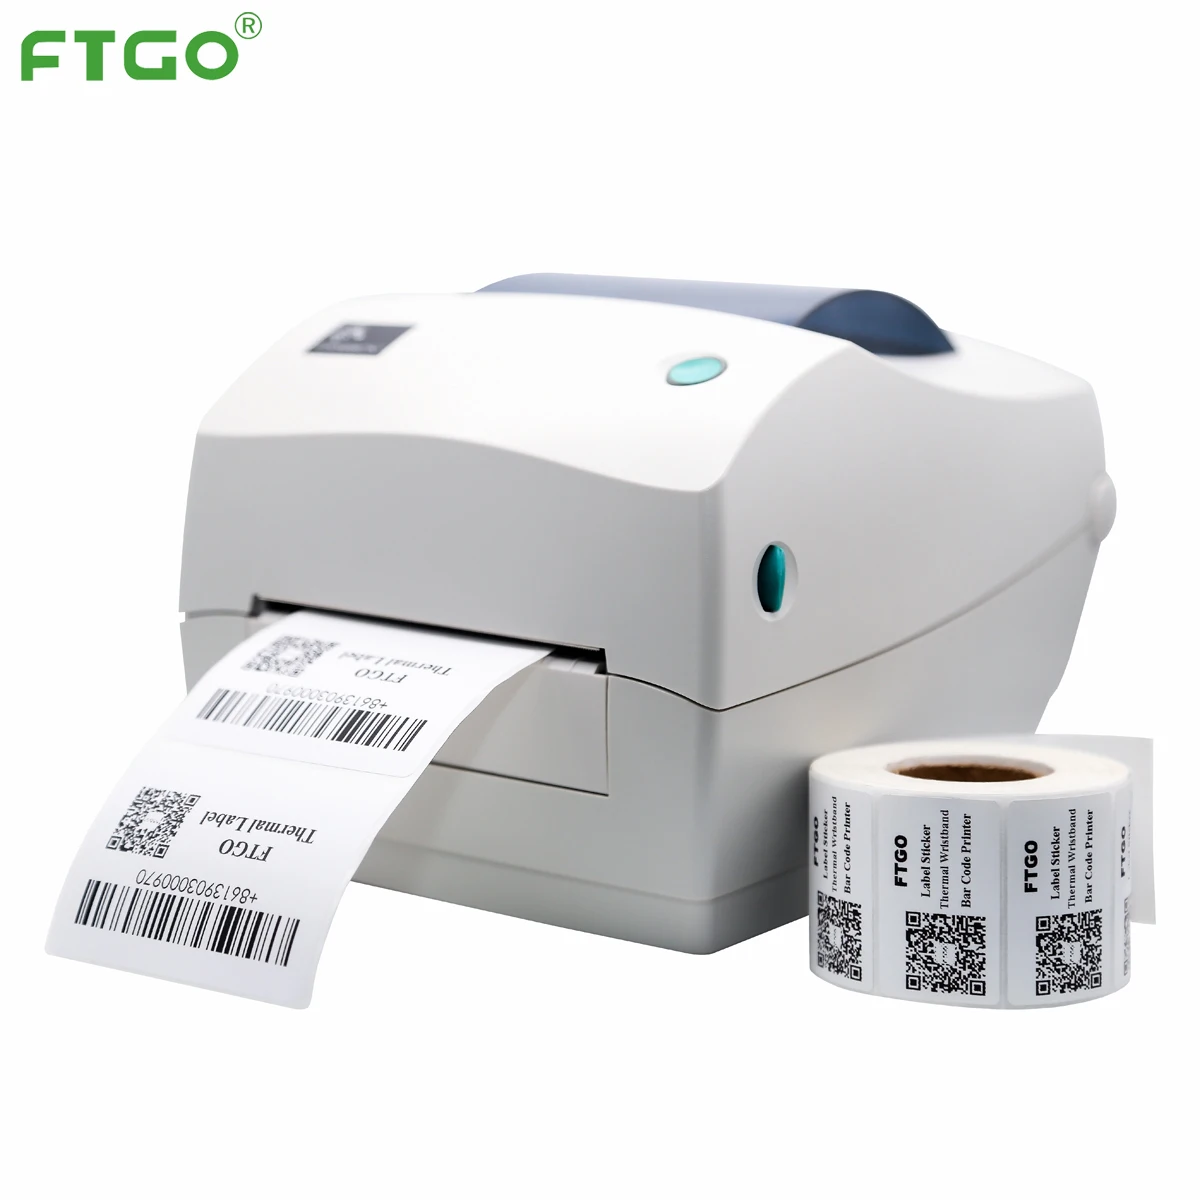 

FTGO both thermal label and thermal transfer printer zebra barcode printer, Black and white